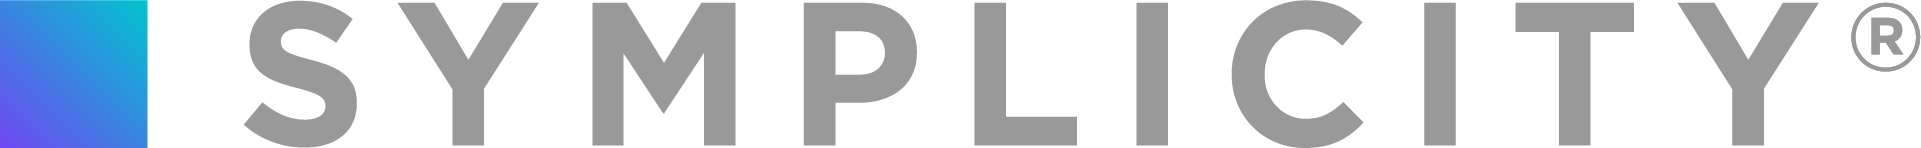 logo_digital_symplicity_reg_gradient-sq